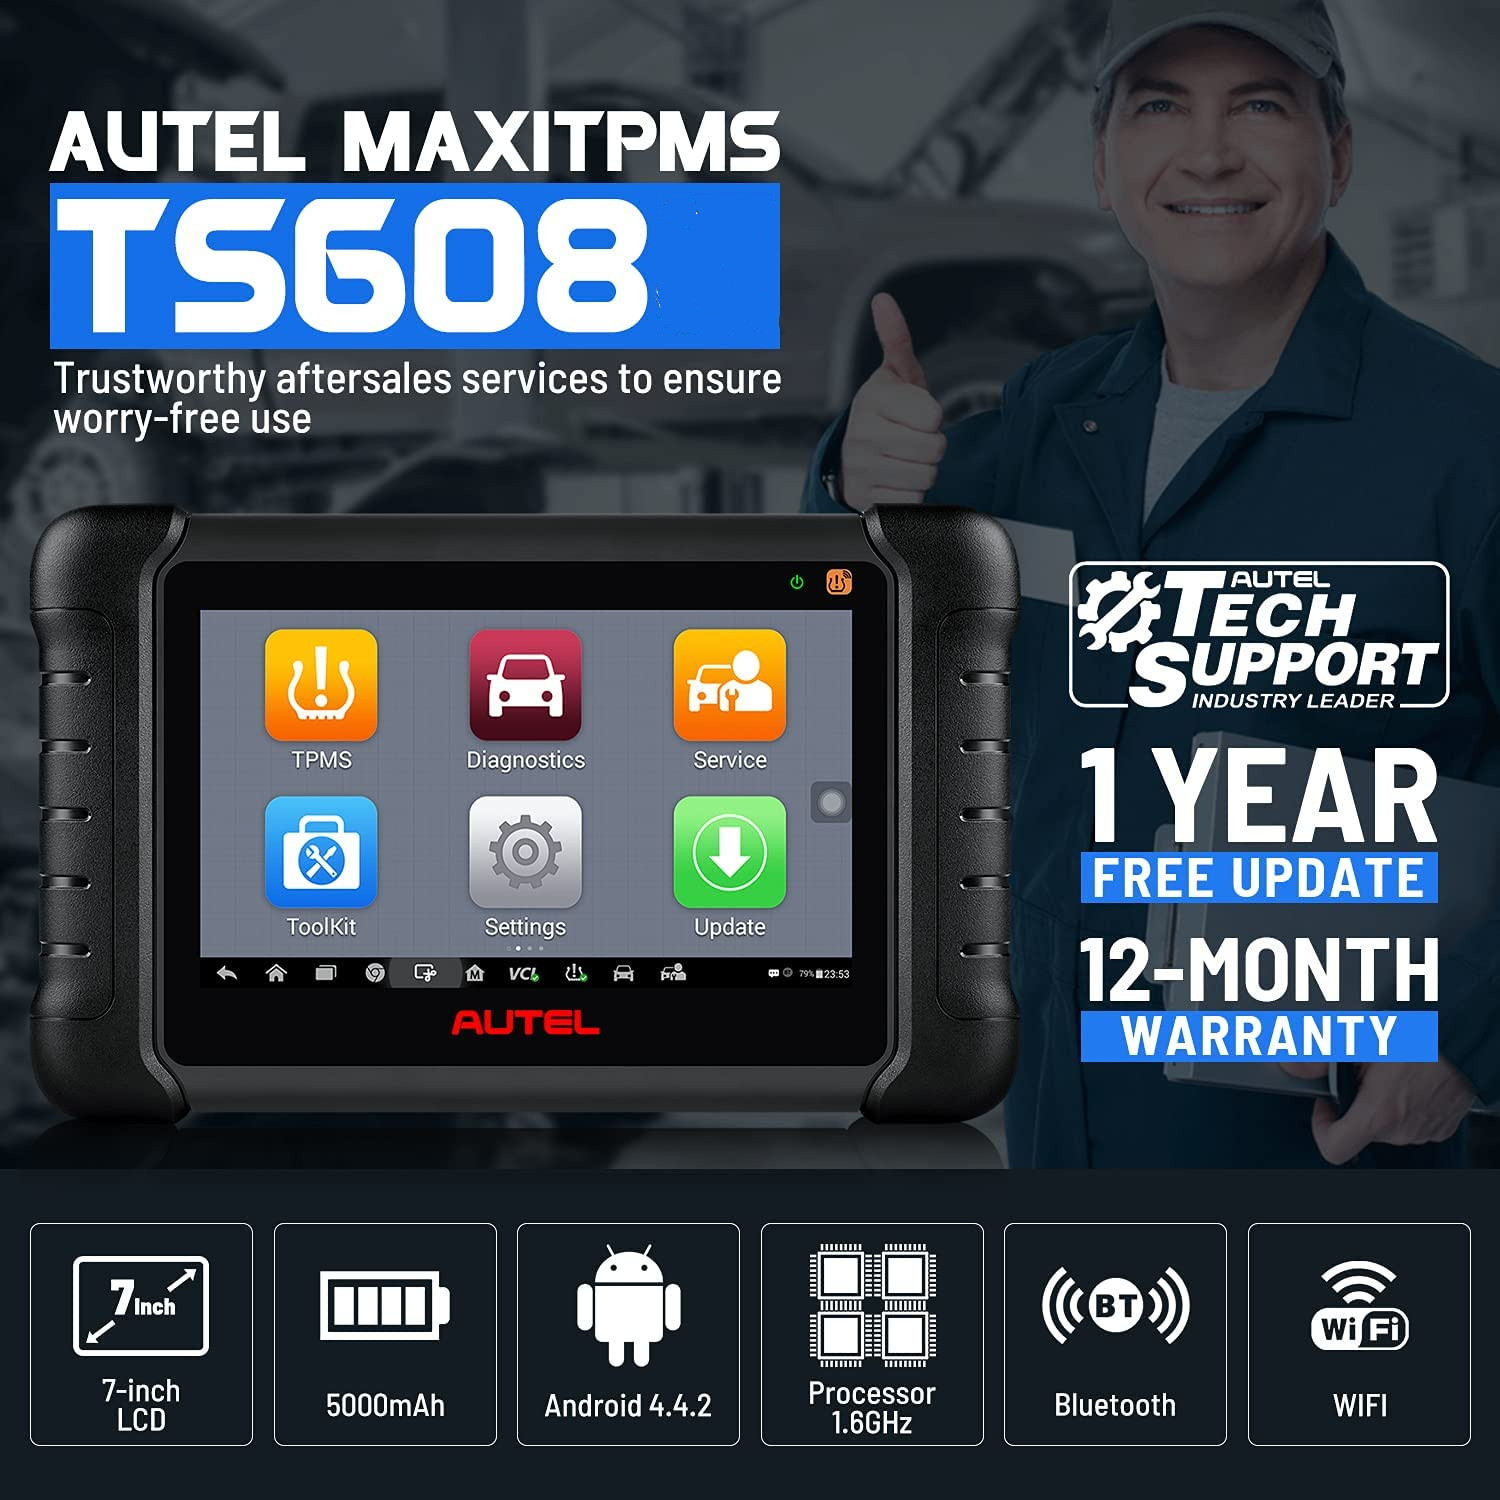 Autel MaxiTPMS TS608